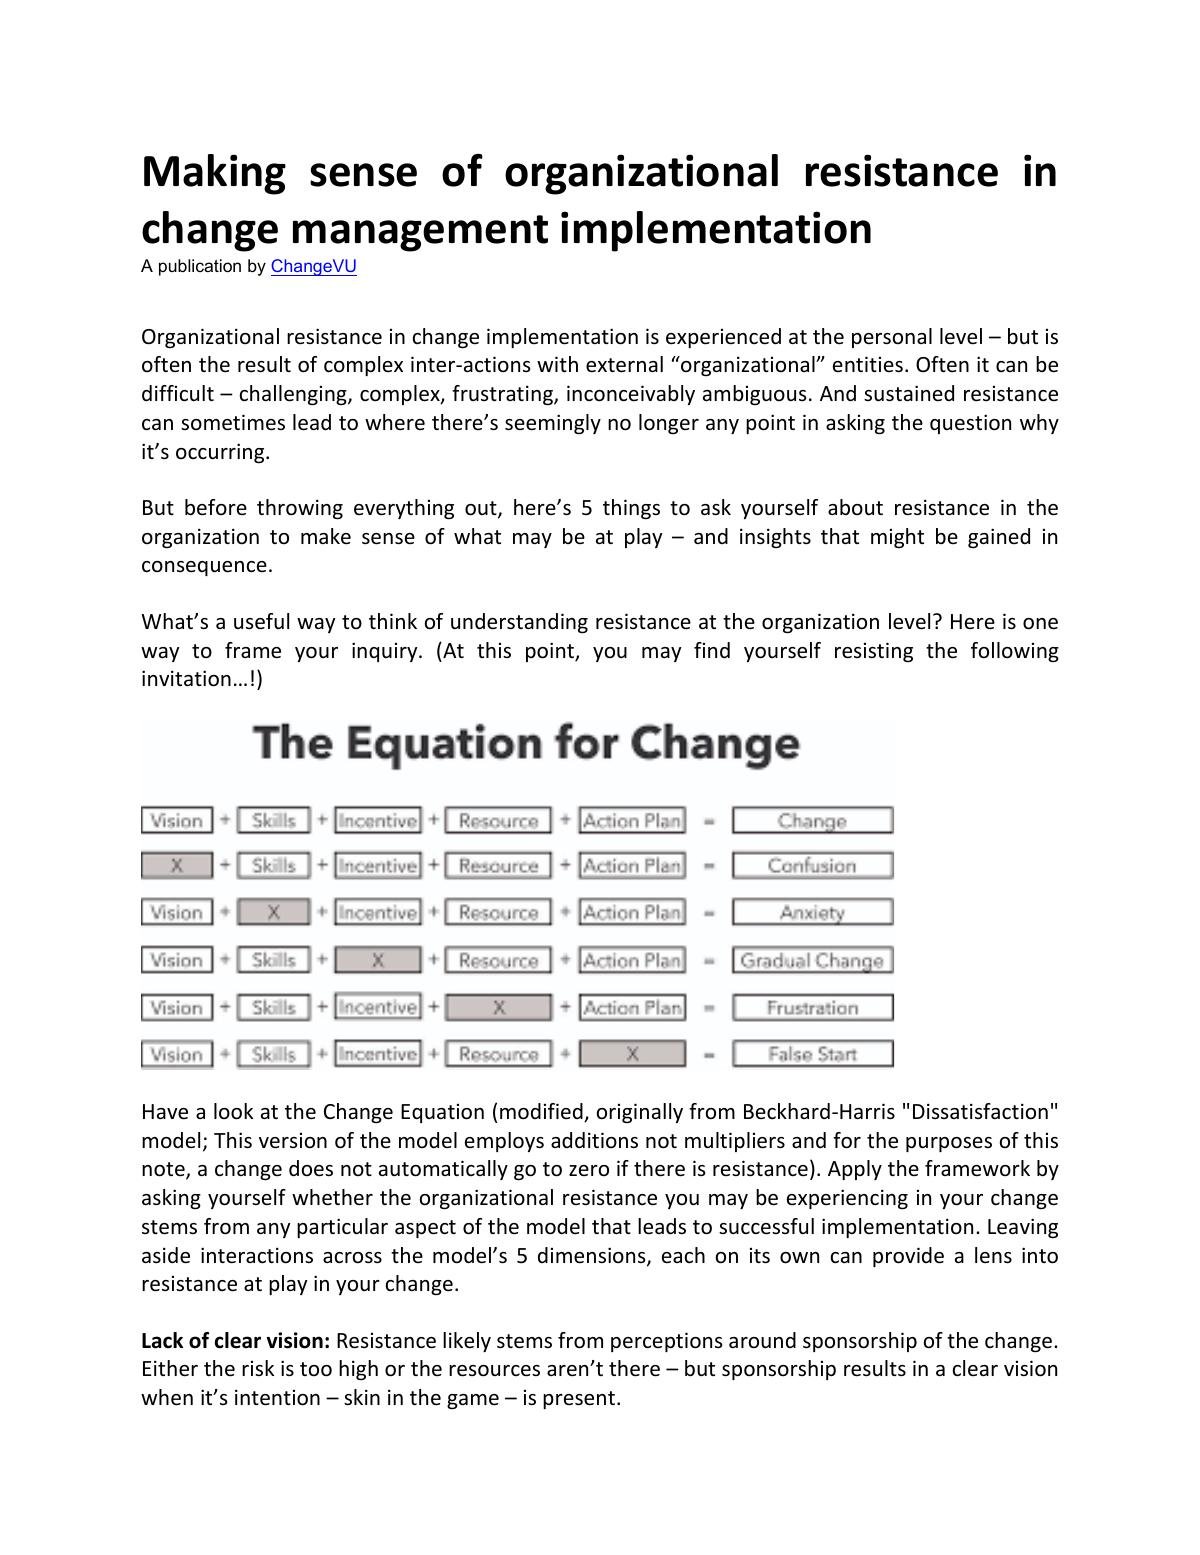 Making sense of organizational resistance in change management implementation